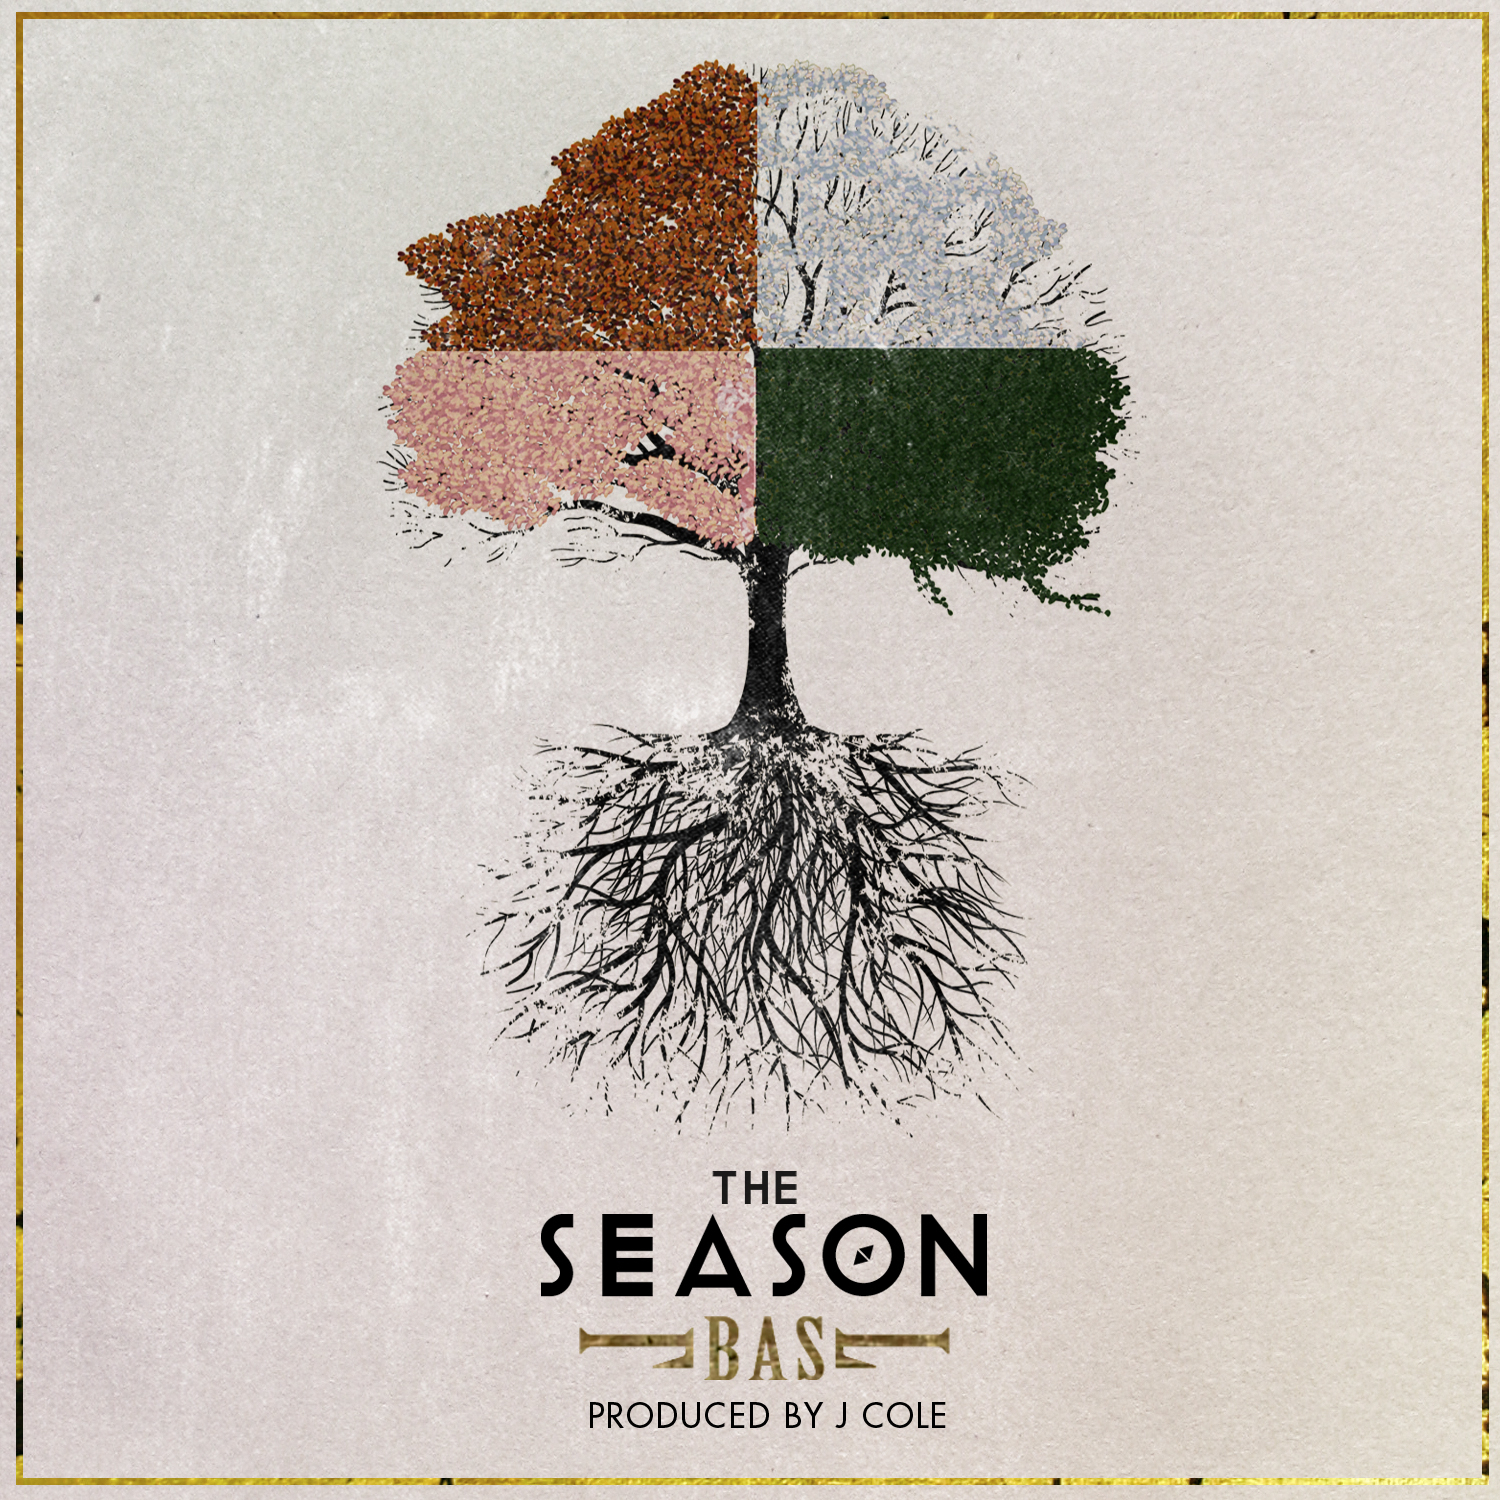 Bas - "The Season" (Produced by J. Cole)